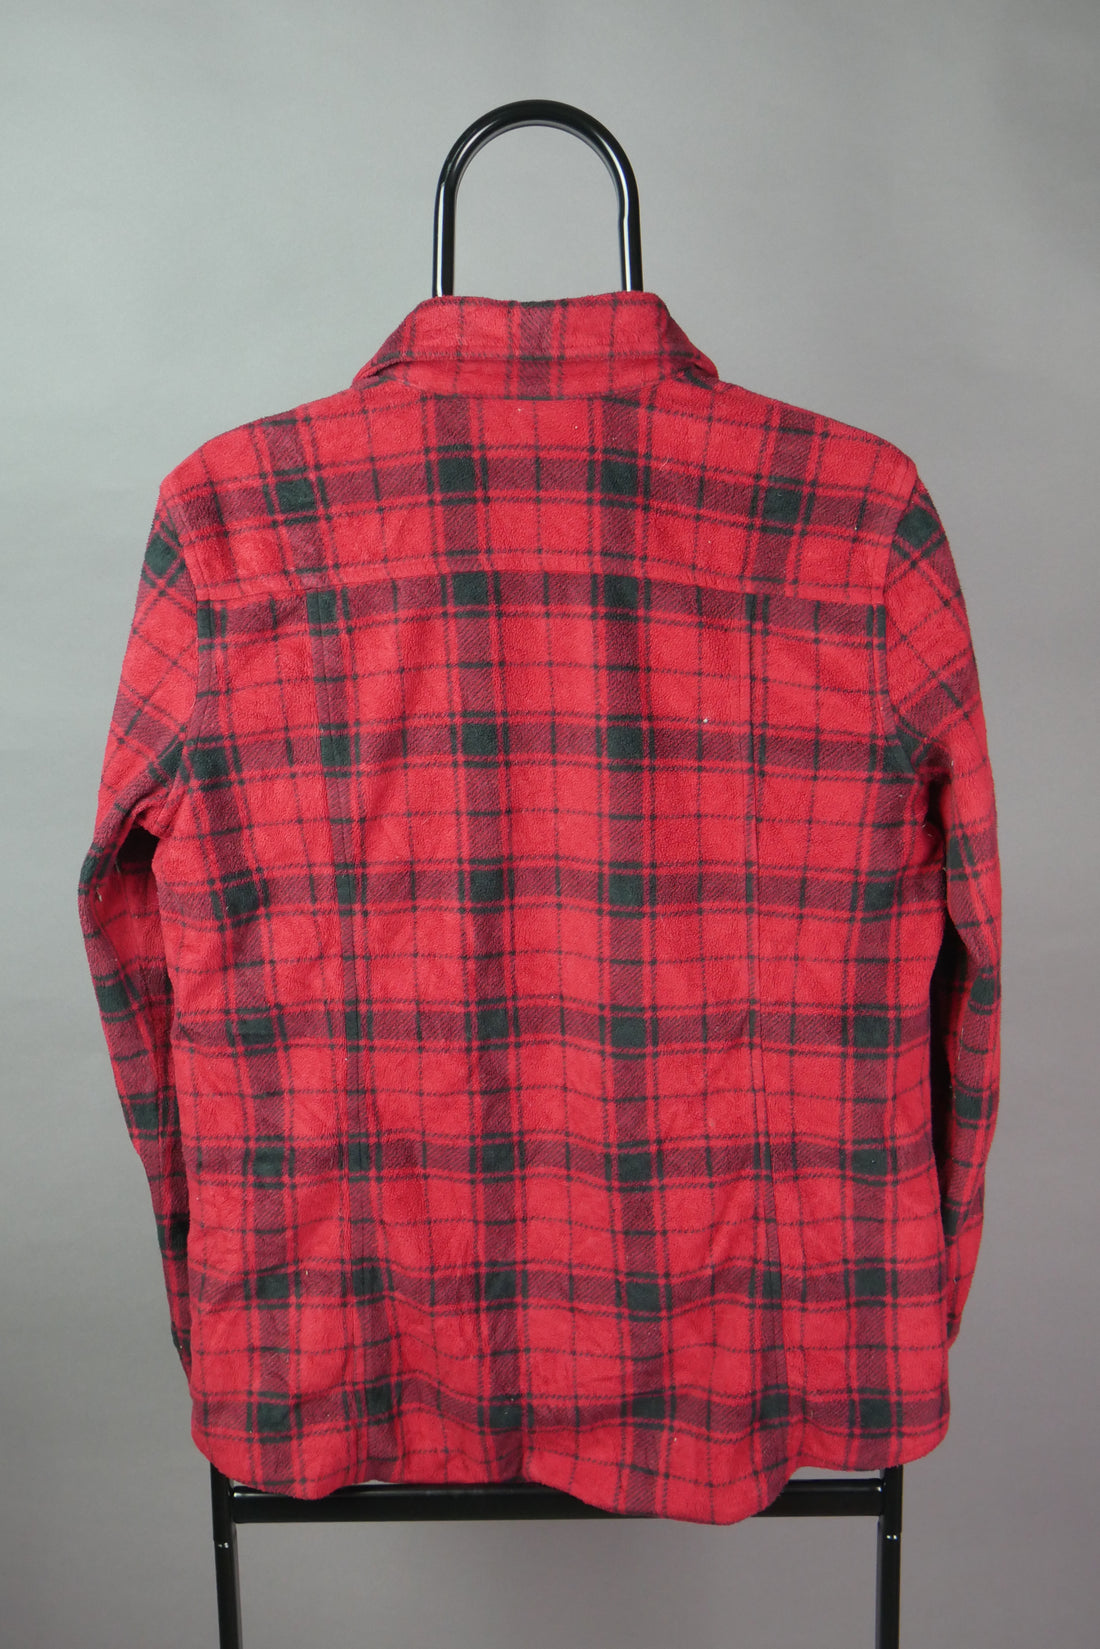 The Eddie Bauer Fleece Plaid Shirt (Women's L)